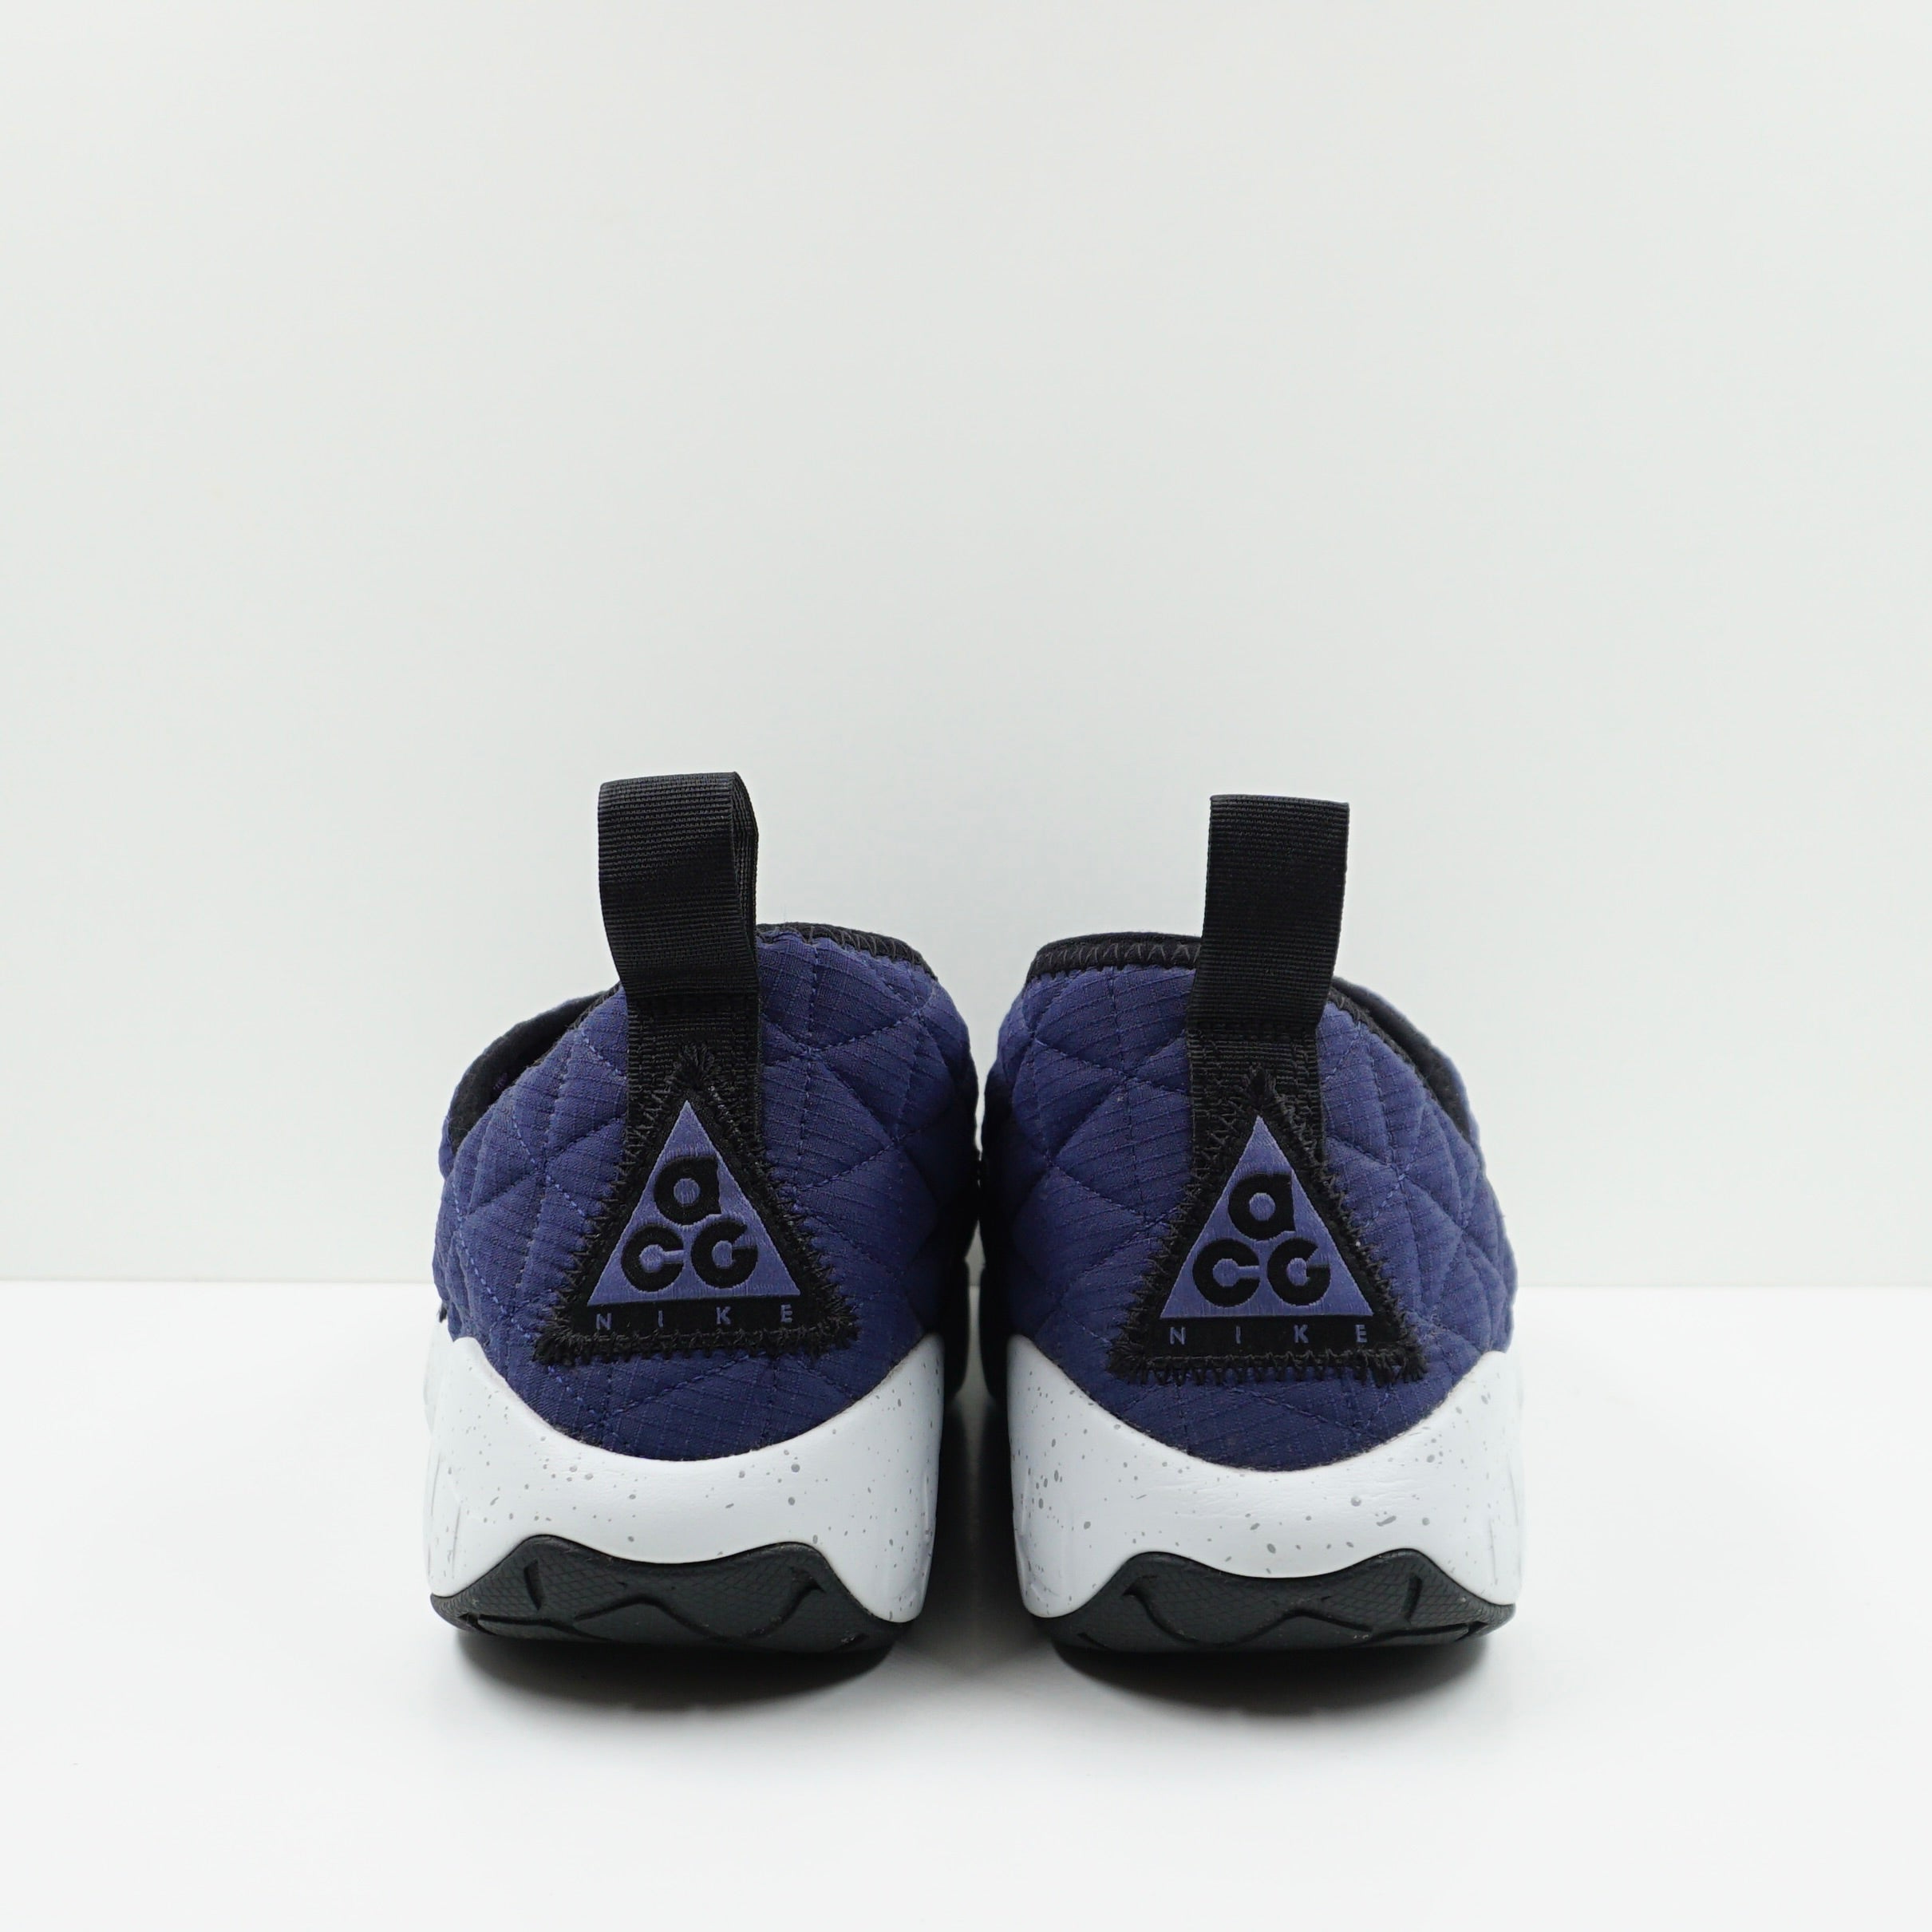 Nike ACG Moc 3.0 Midnight Navy Sanded Purple